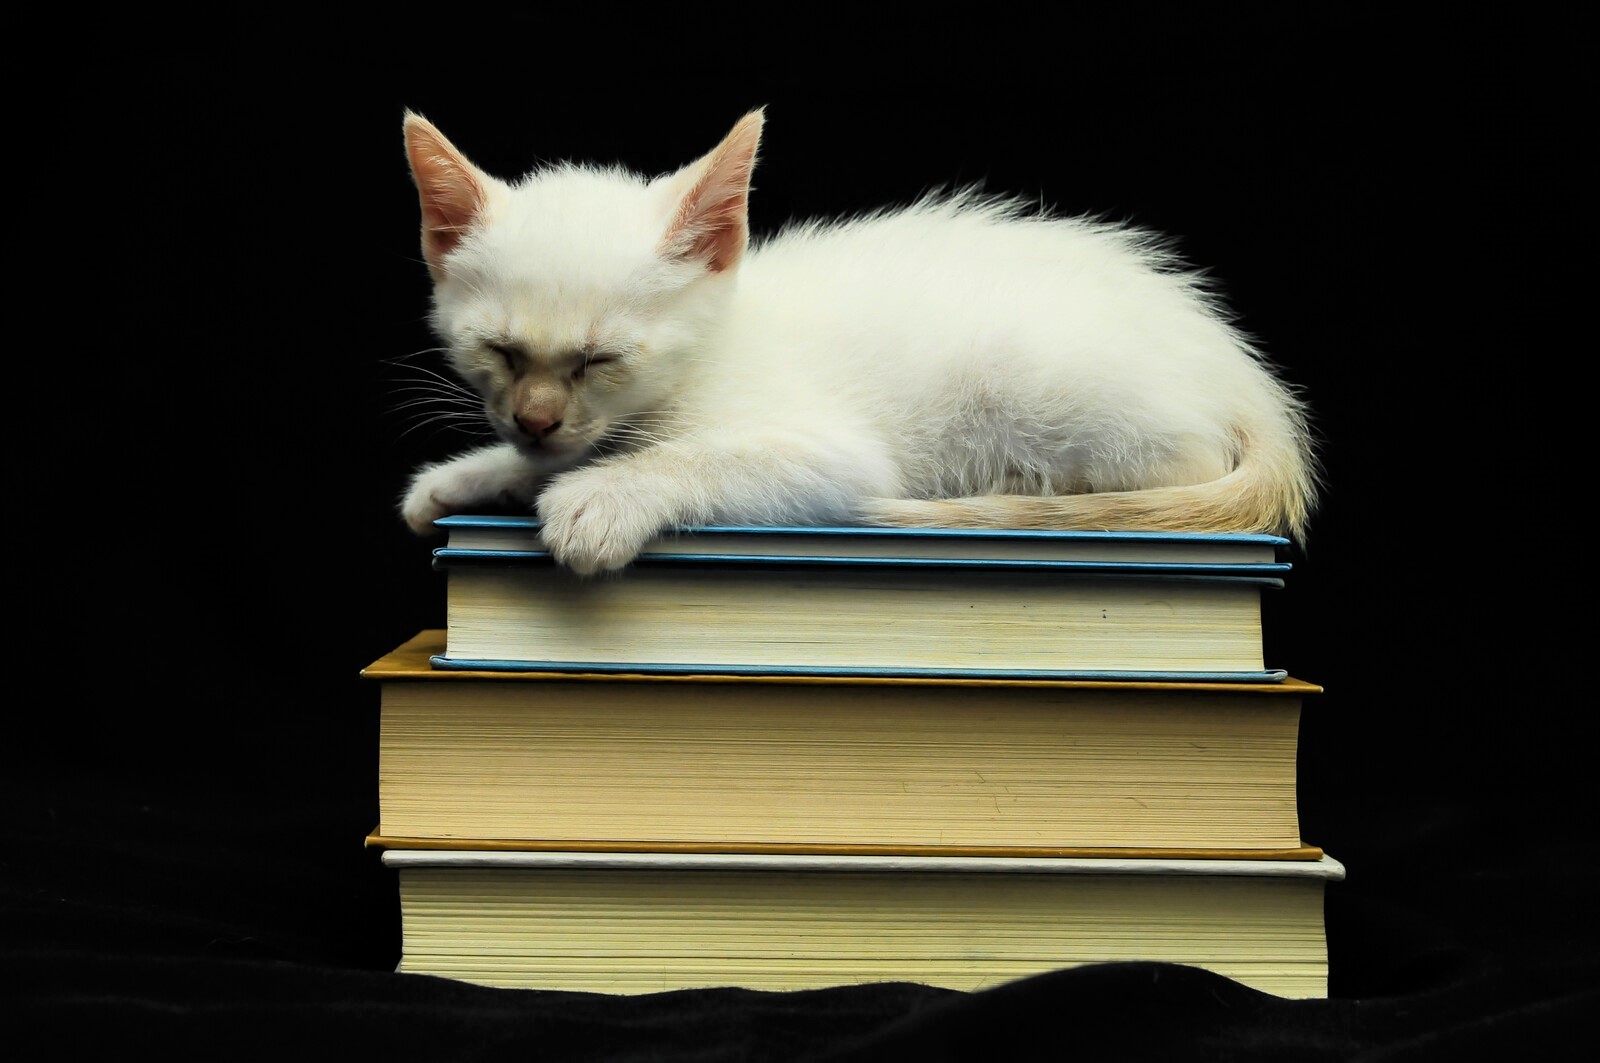 kitten on stack of books ©canstockphoto / underworld